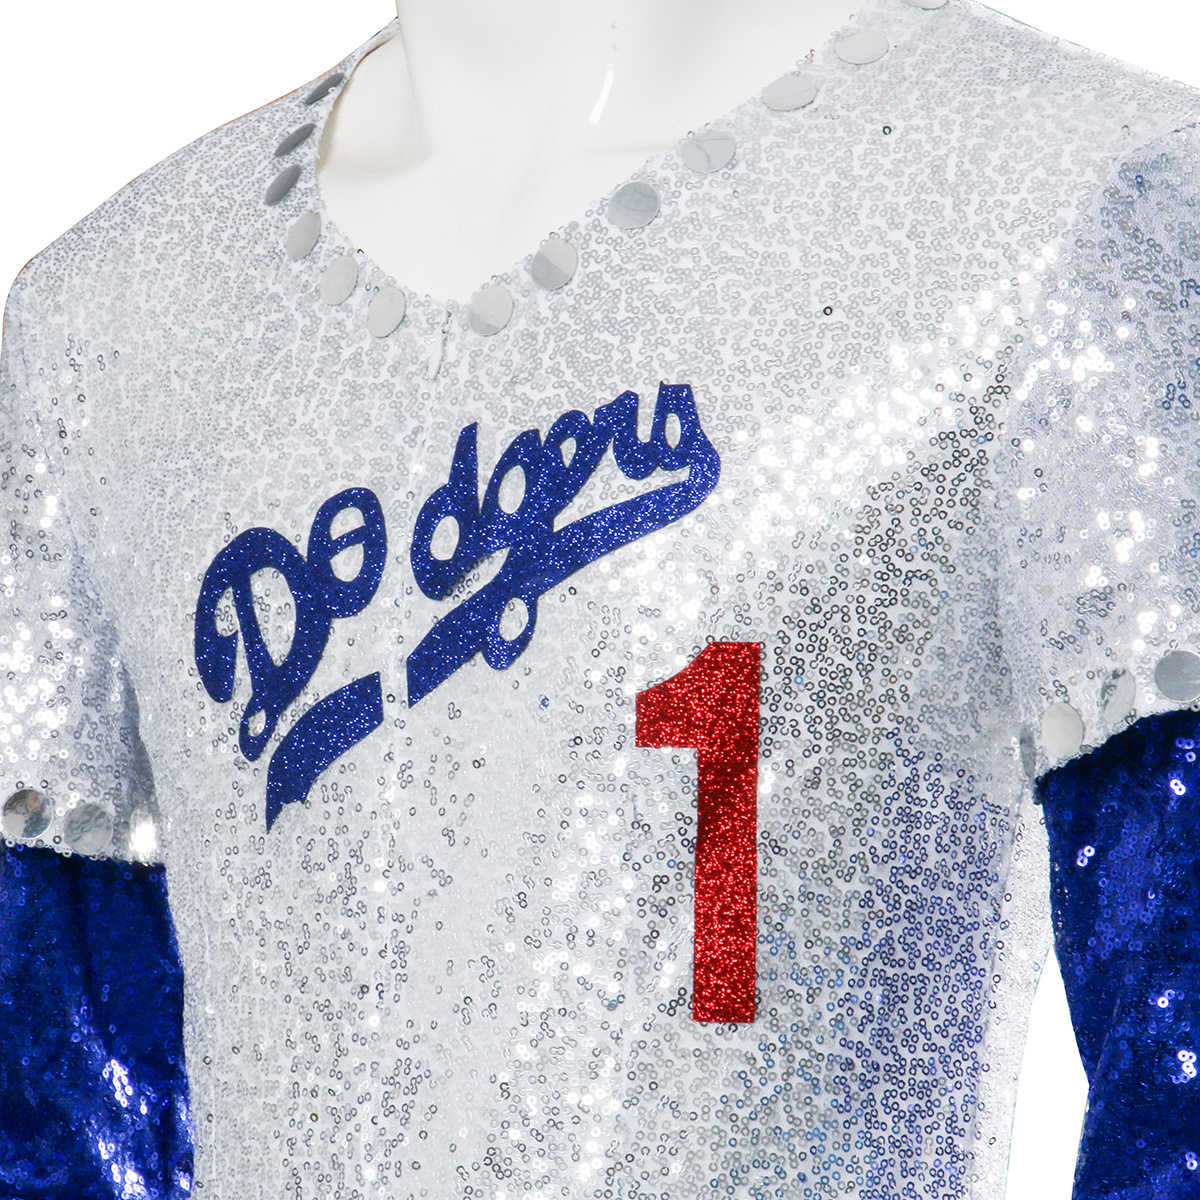 Elton John Dodgers Cosplay Costume Dodgers Baseball Uniform for Men Women Carnival Costumes